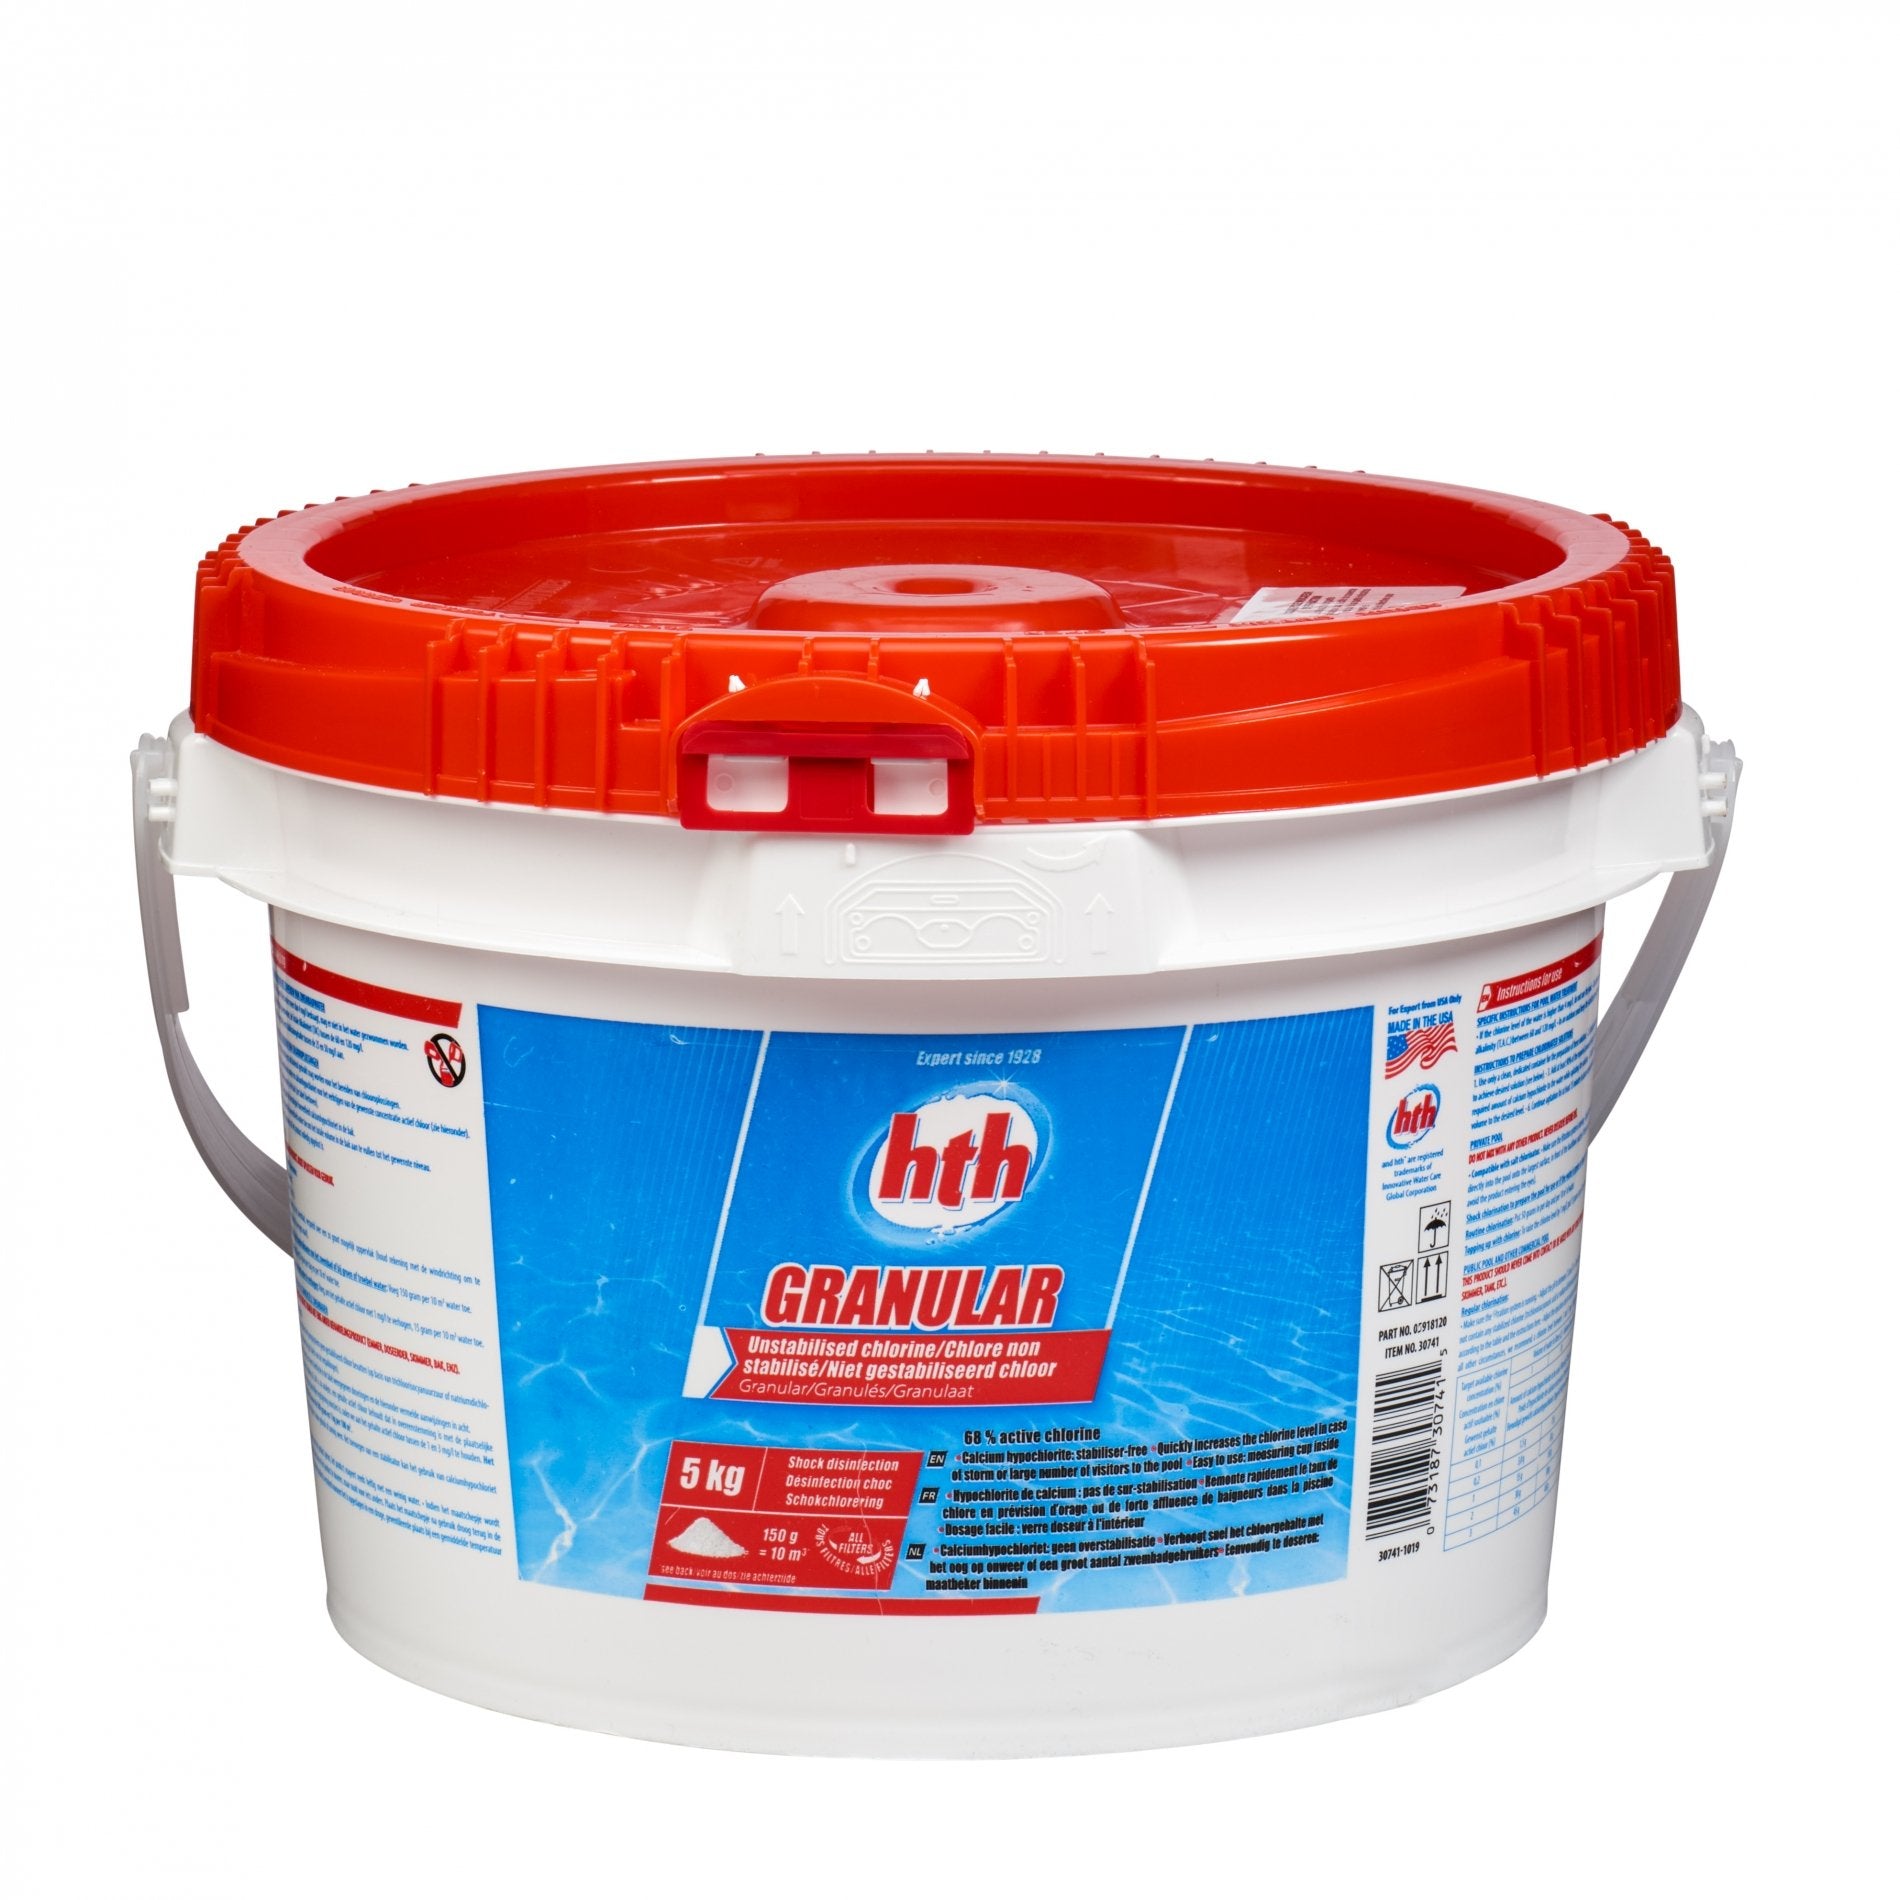 HTH Granulated - Granulated calcium hypochlorite